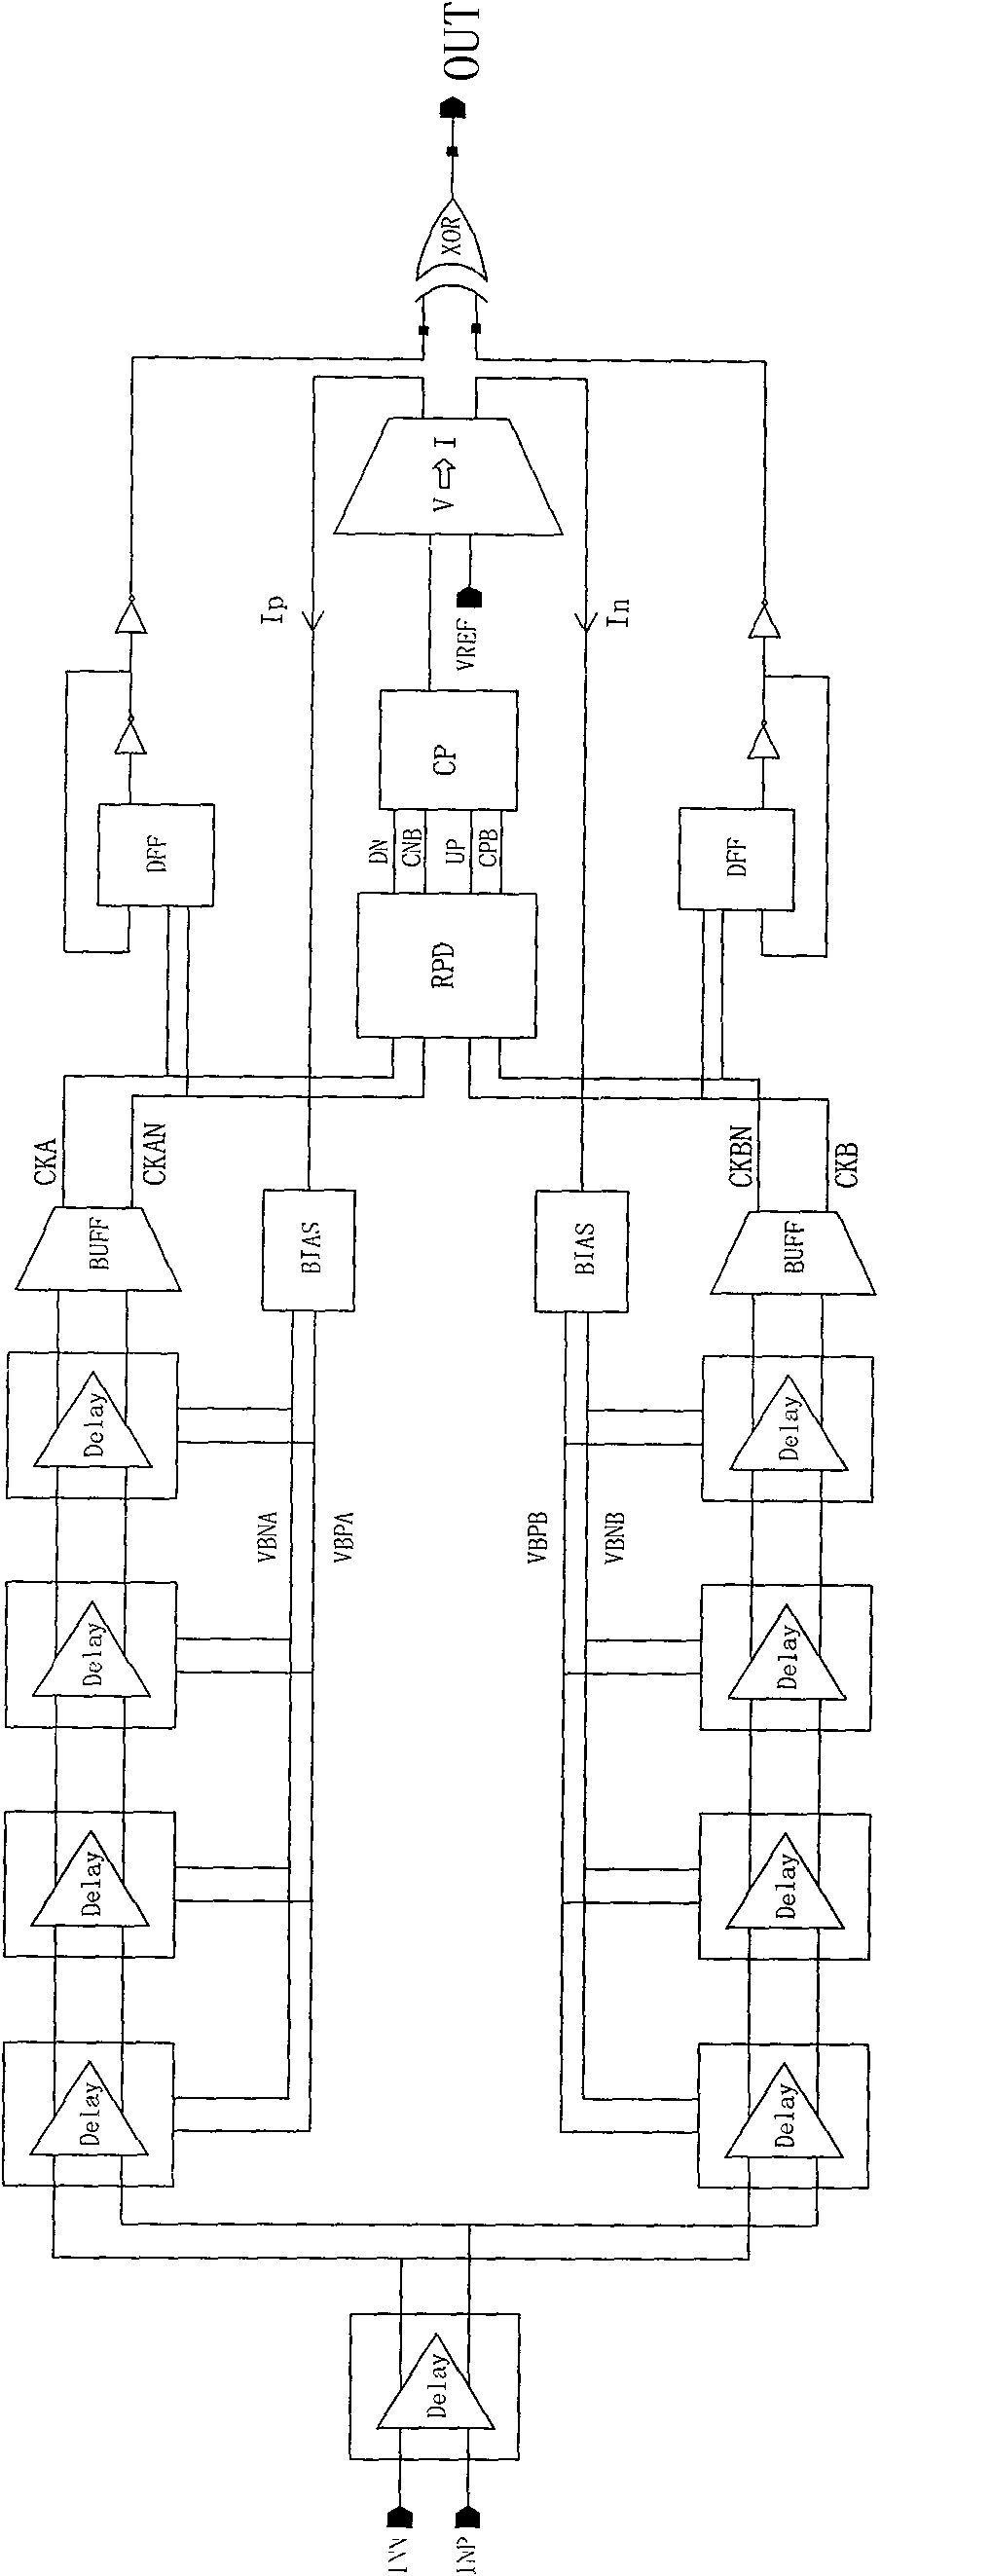 Dutyfactor adjusting method and circuit